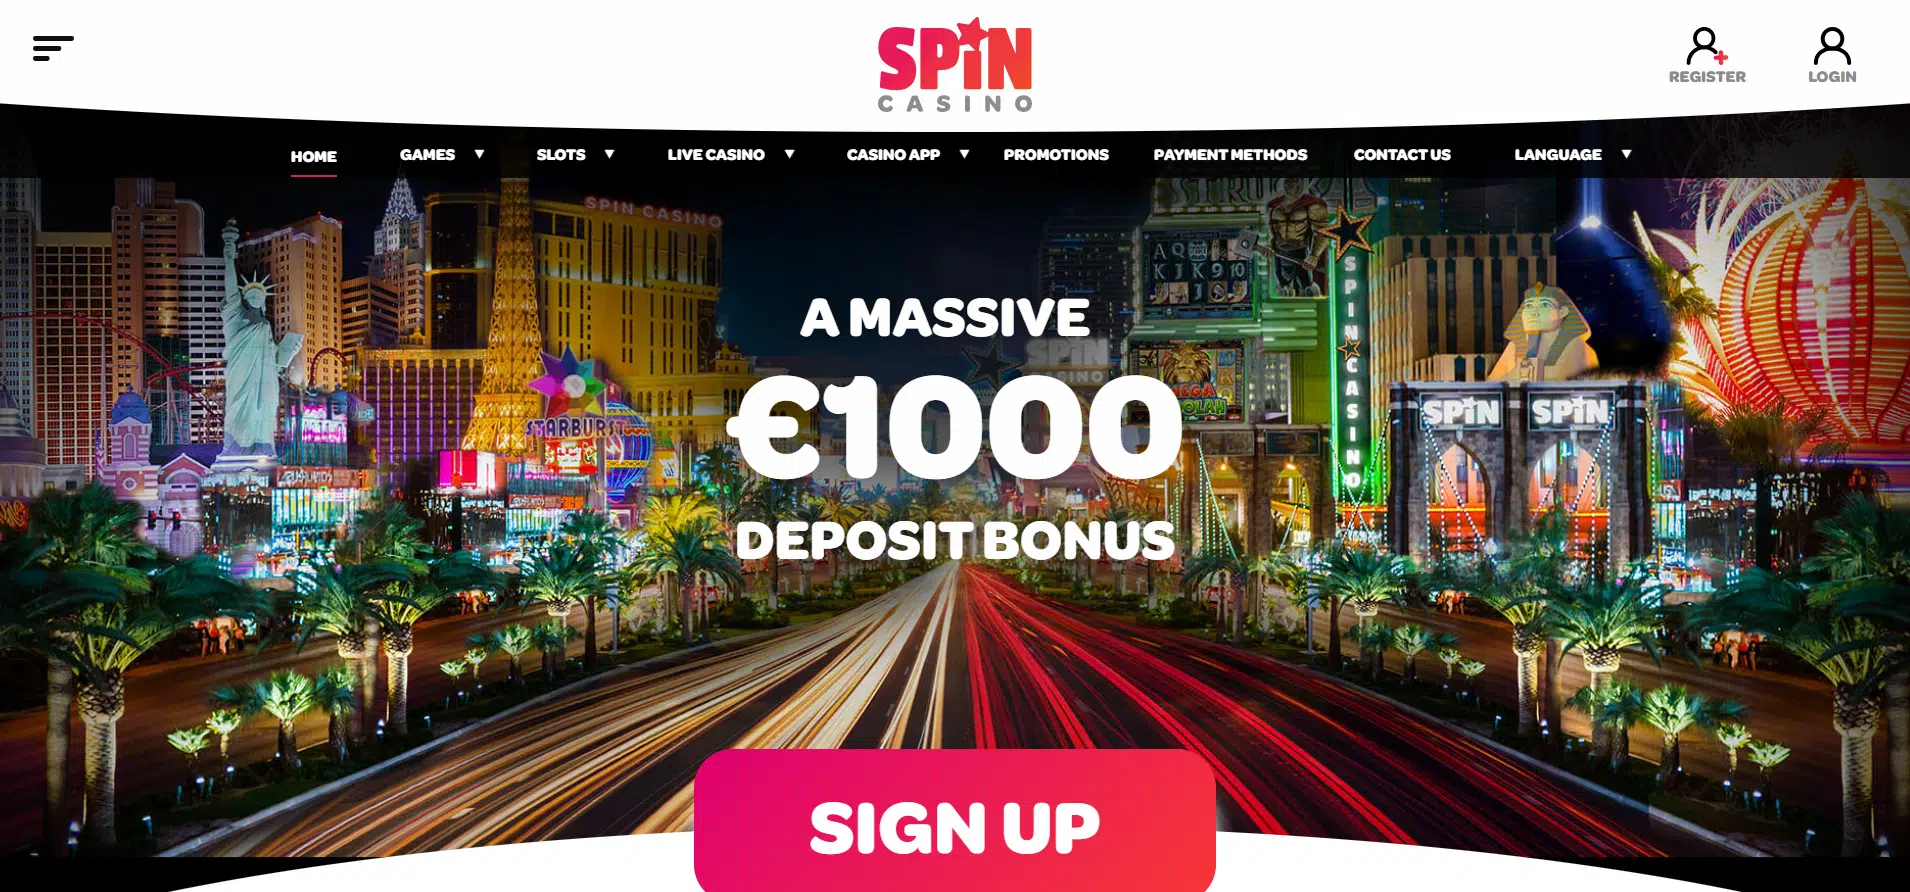 spin casino homepage